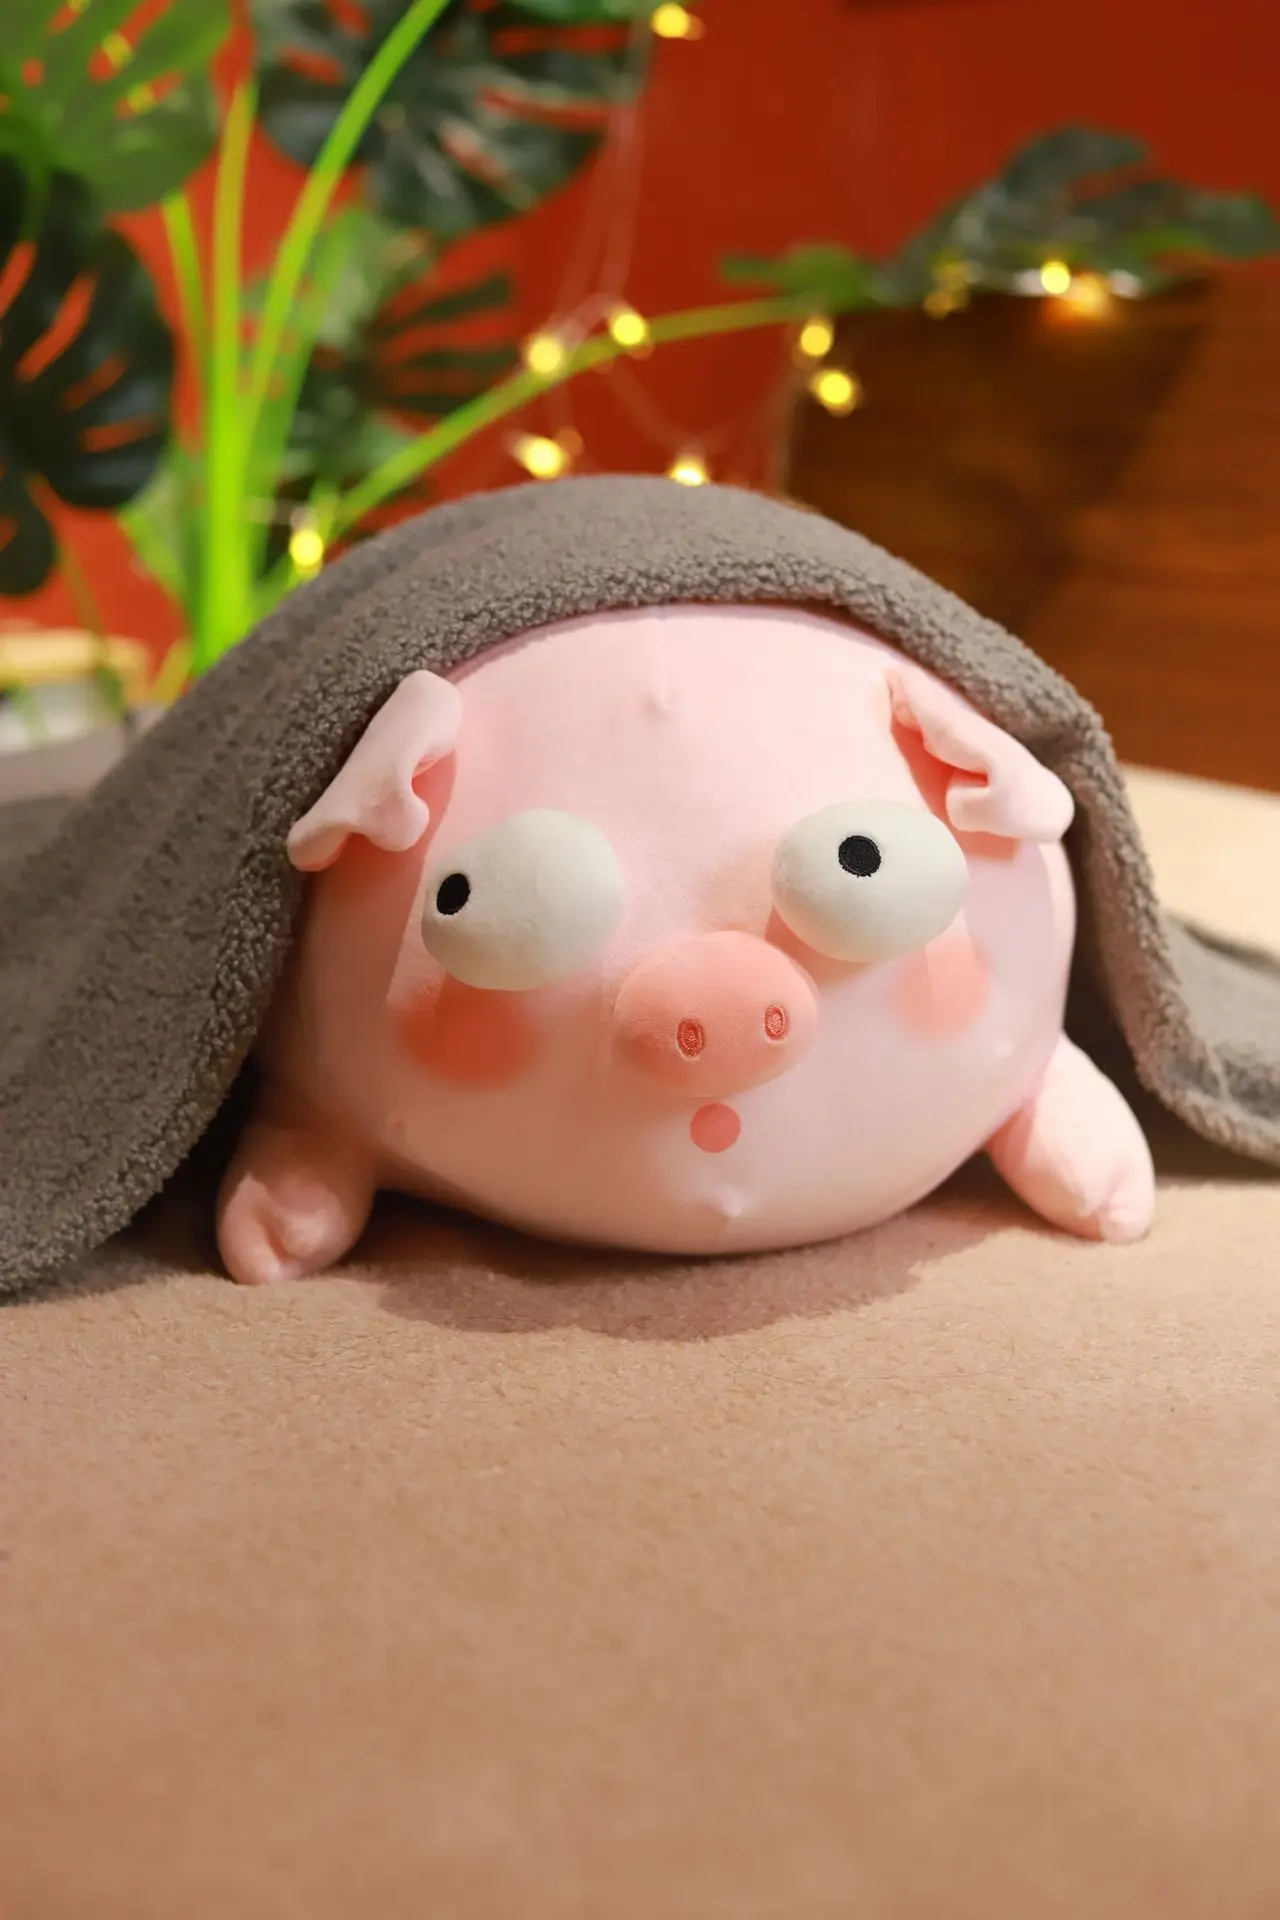 Sea Pig Plush | Big Eyes Ugly Sleeping Pig Plush Toy -6